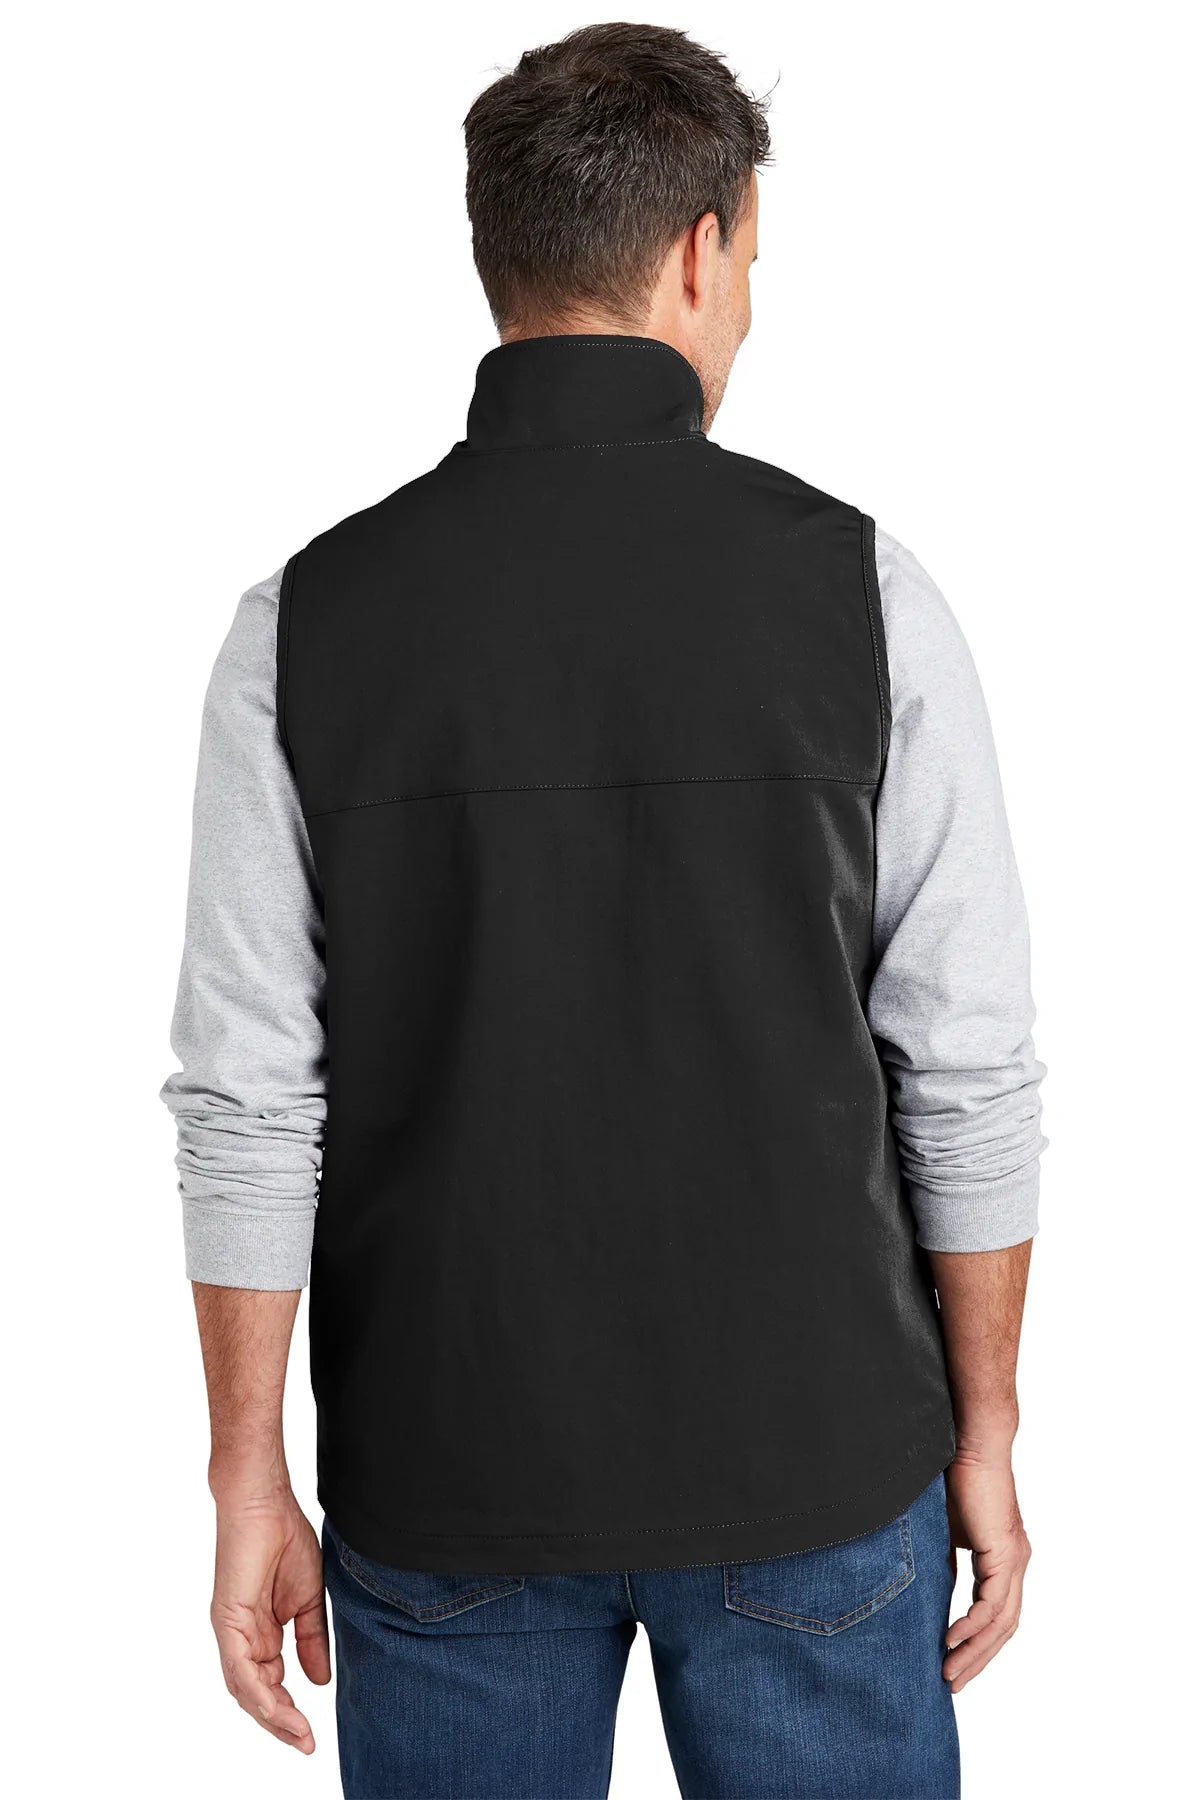 Carhartt Super Dux Soft Shell Customized Vests, Black